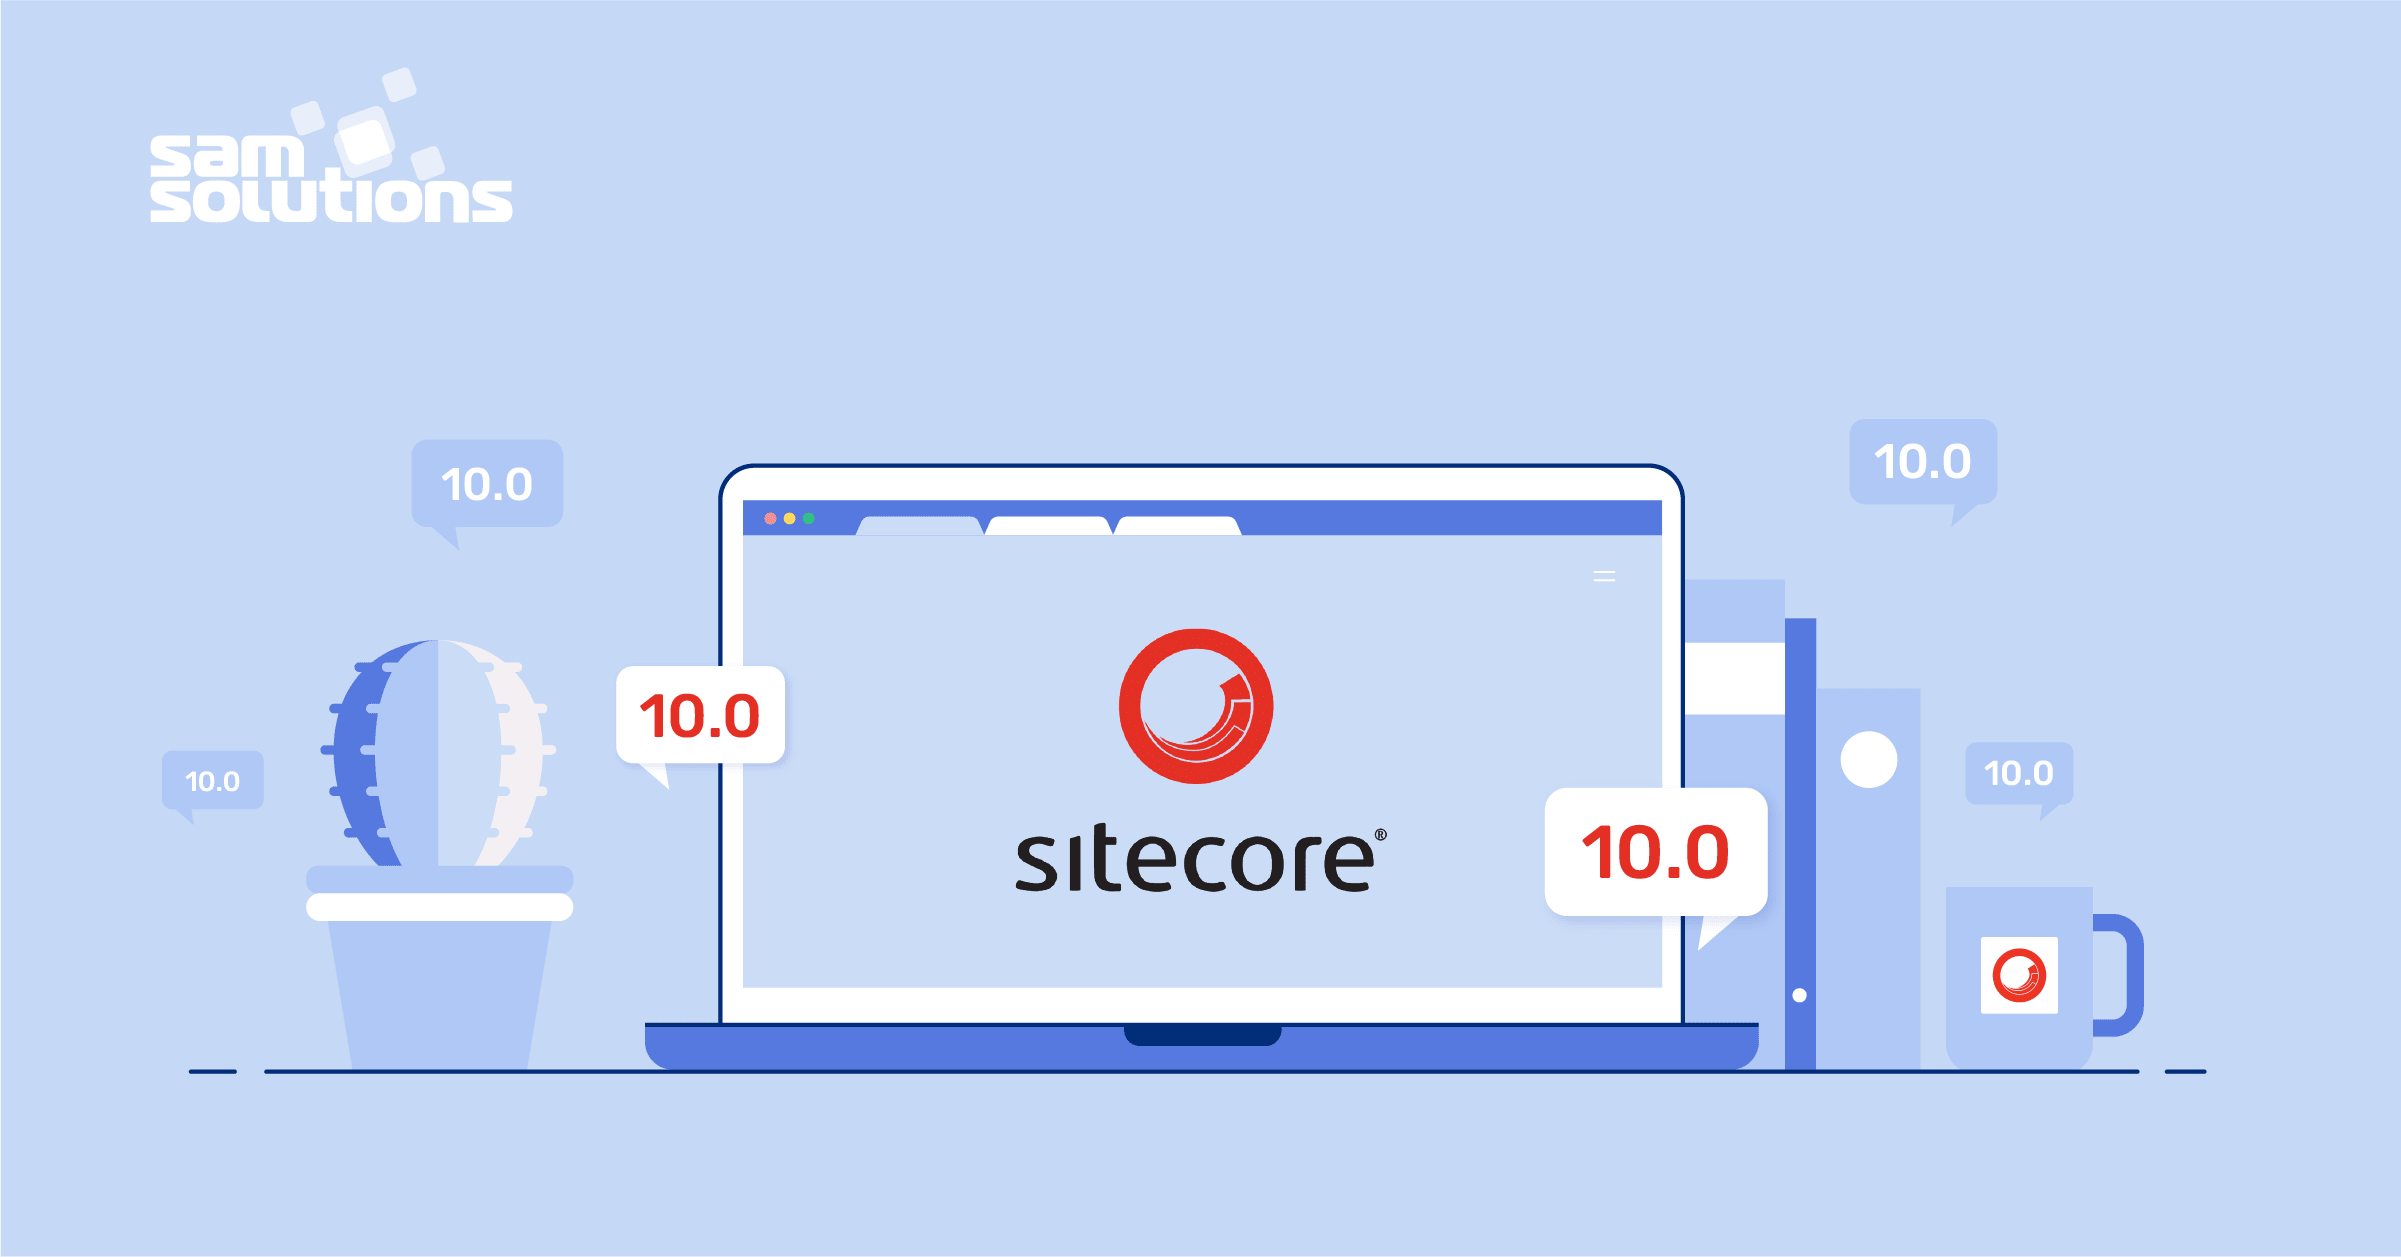 Sitecore-10-NET-Developer Prüfungsfrage